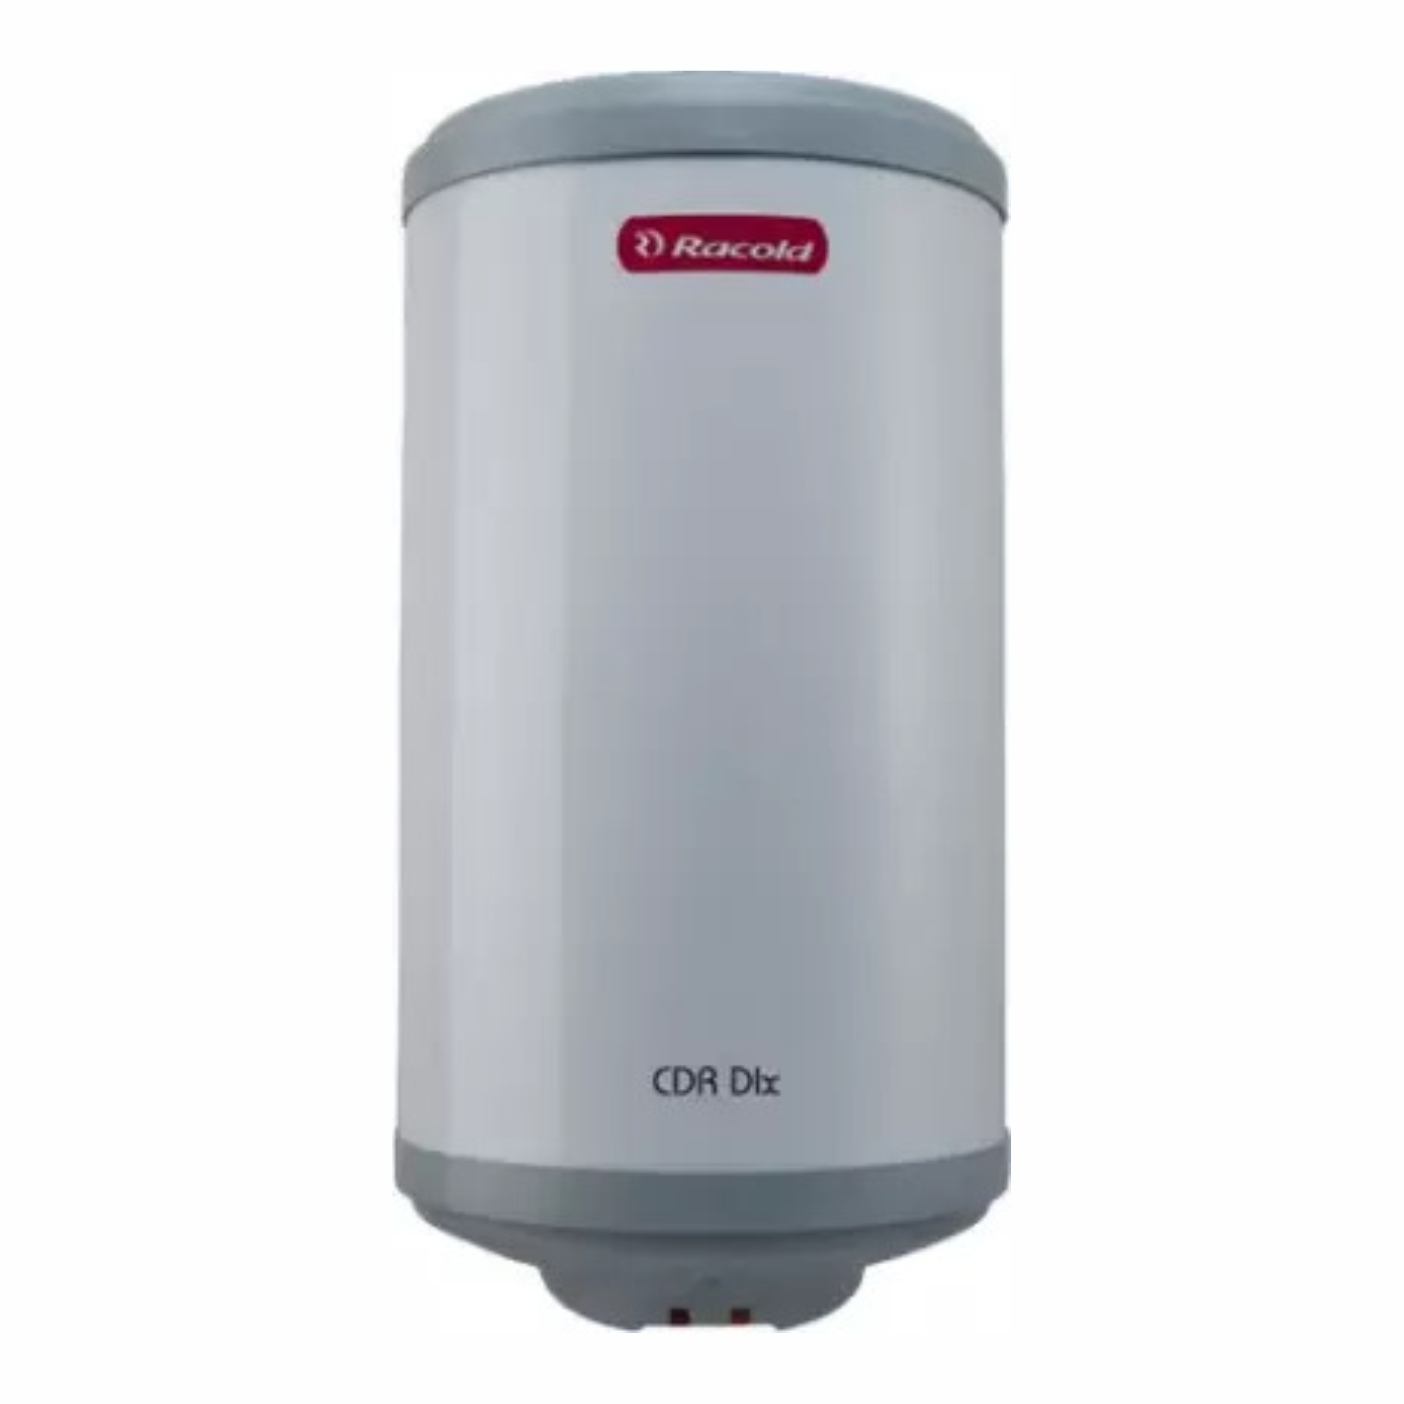 Racold CDR DLX Vertical Water Heater (10 Liter)